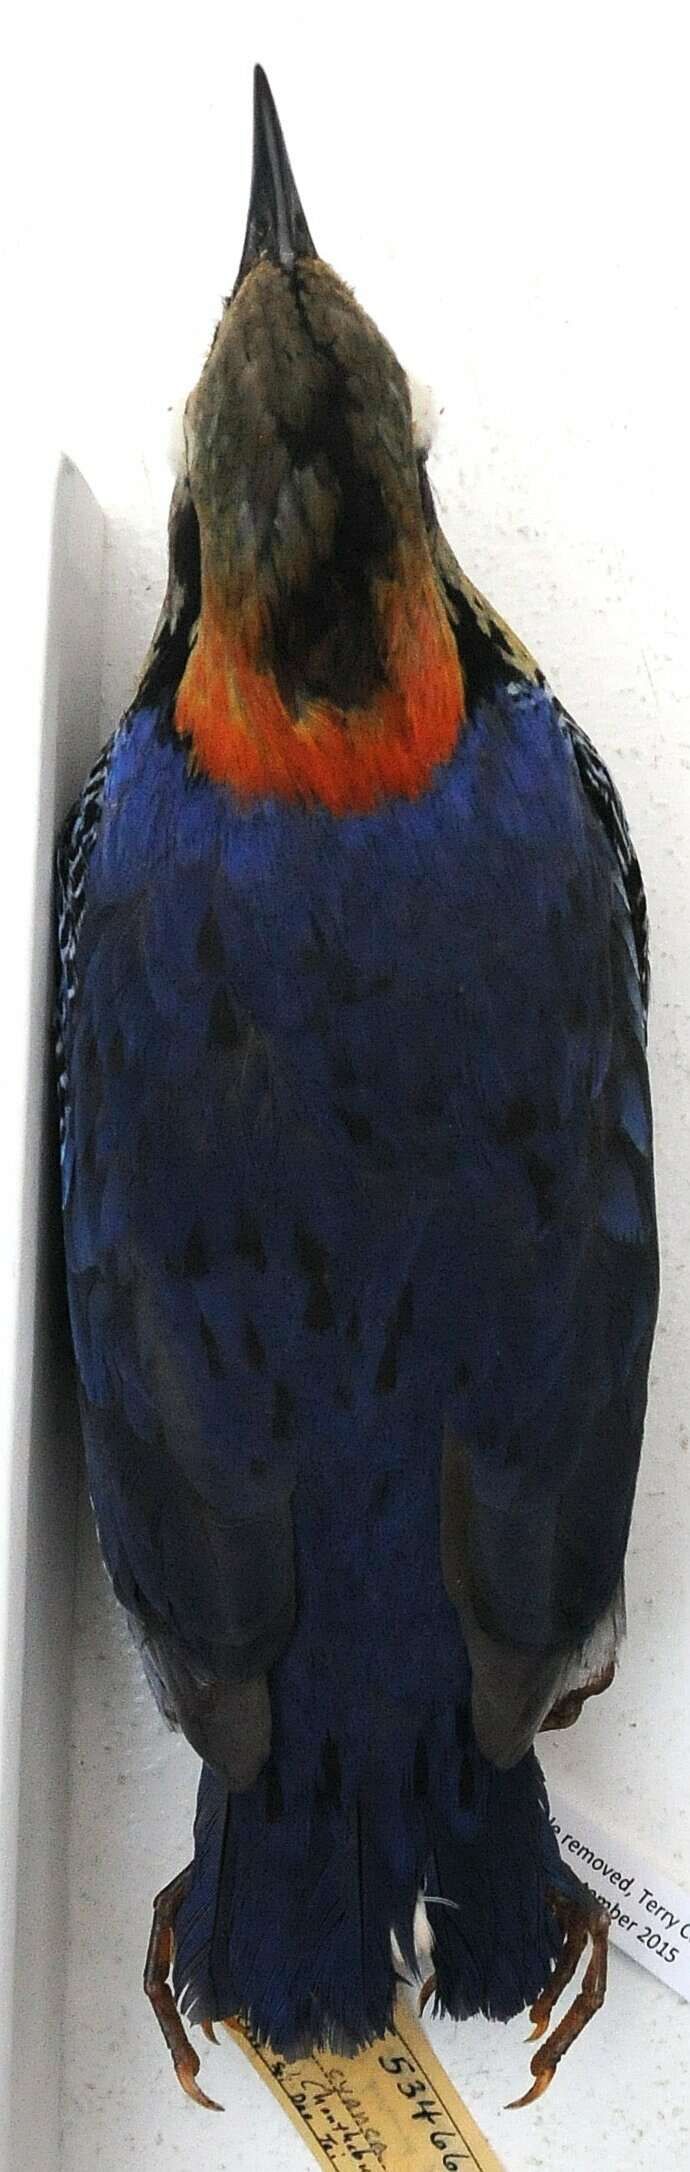 Image of birds